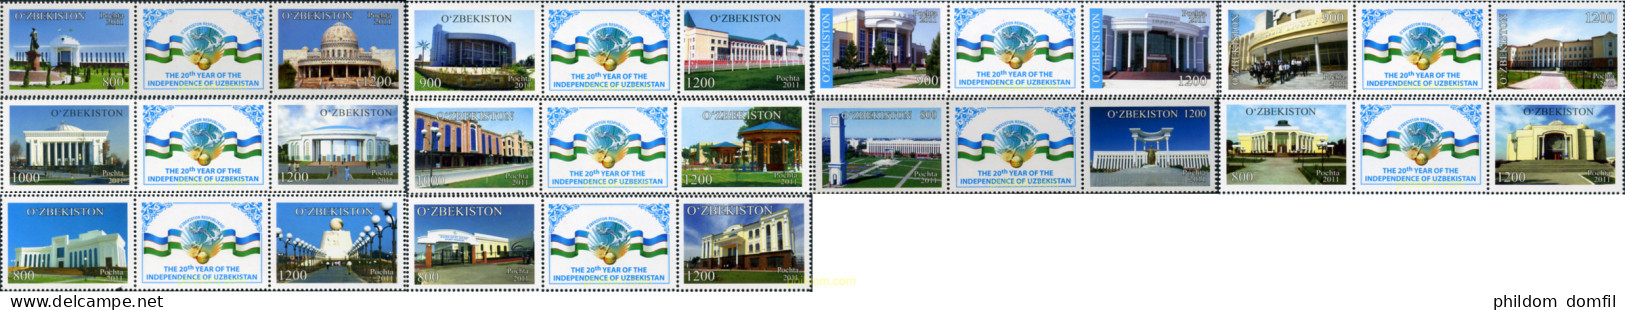 347763 MNH UZBEKISTAN 2011 20 ANIVERSARIO DE LA INDEPENDENCIA DE UZBEKISTAN - Uzbekistán